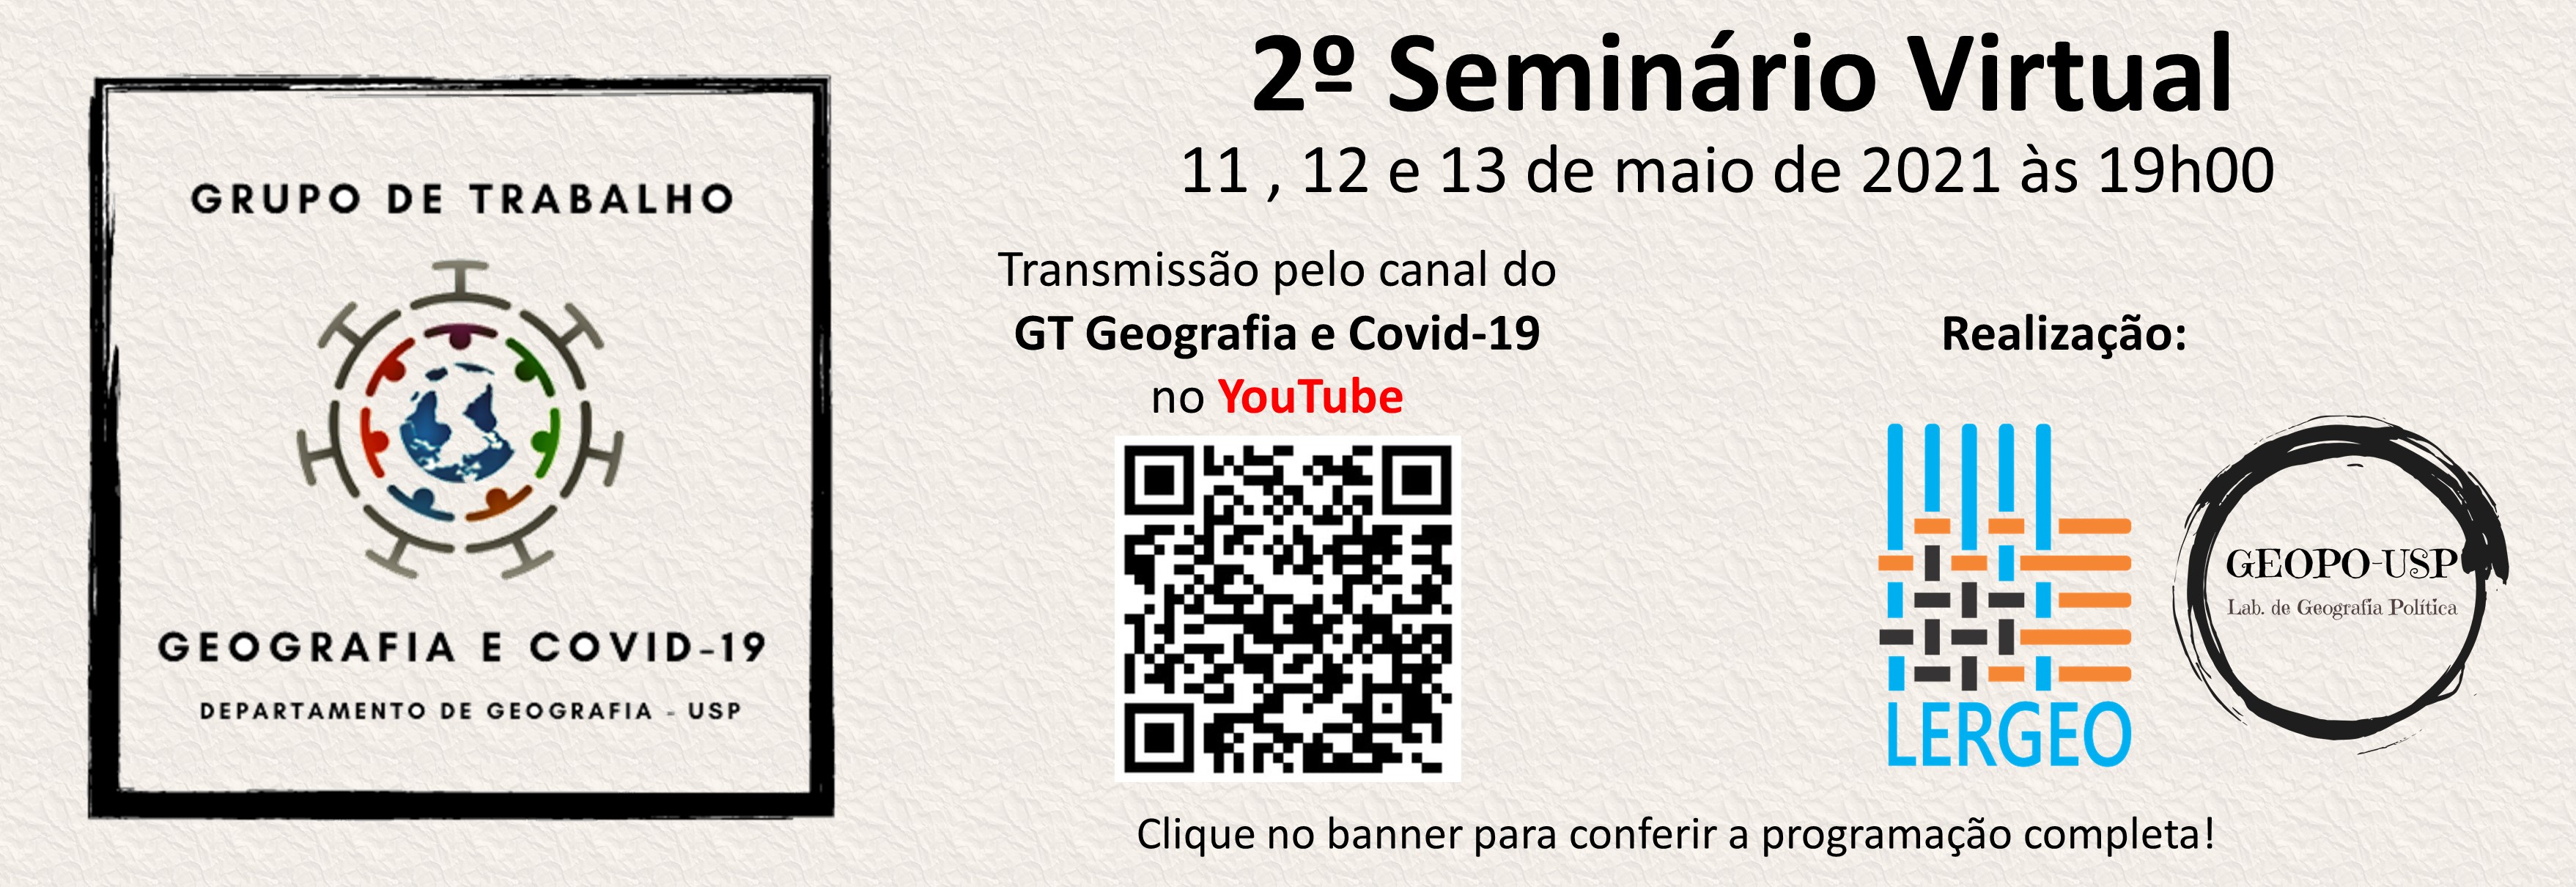 2º Seminário Virtual - banner para labs.jpg